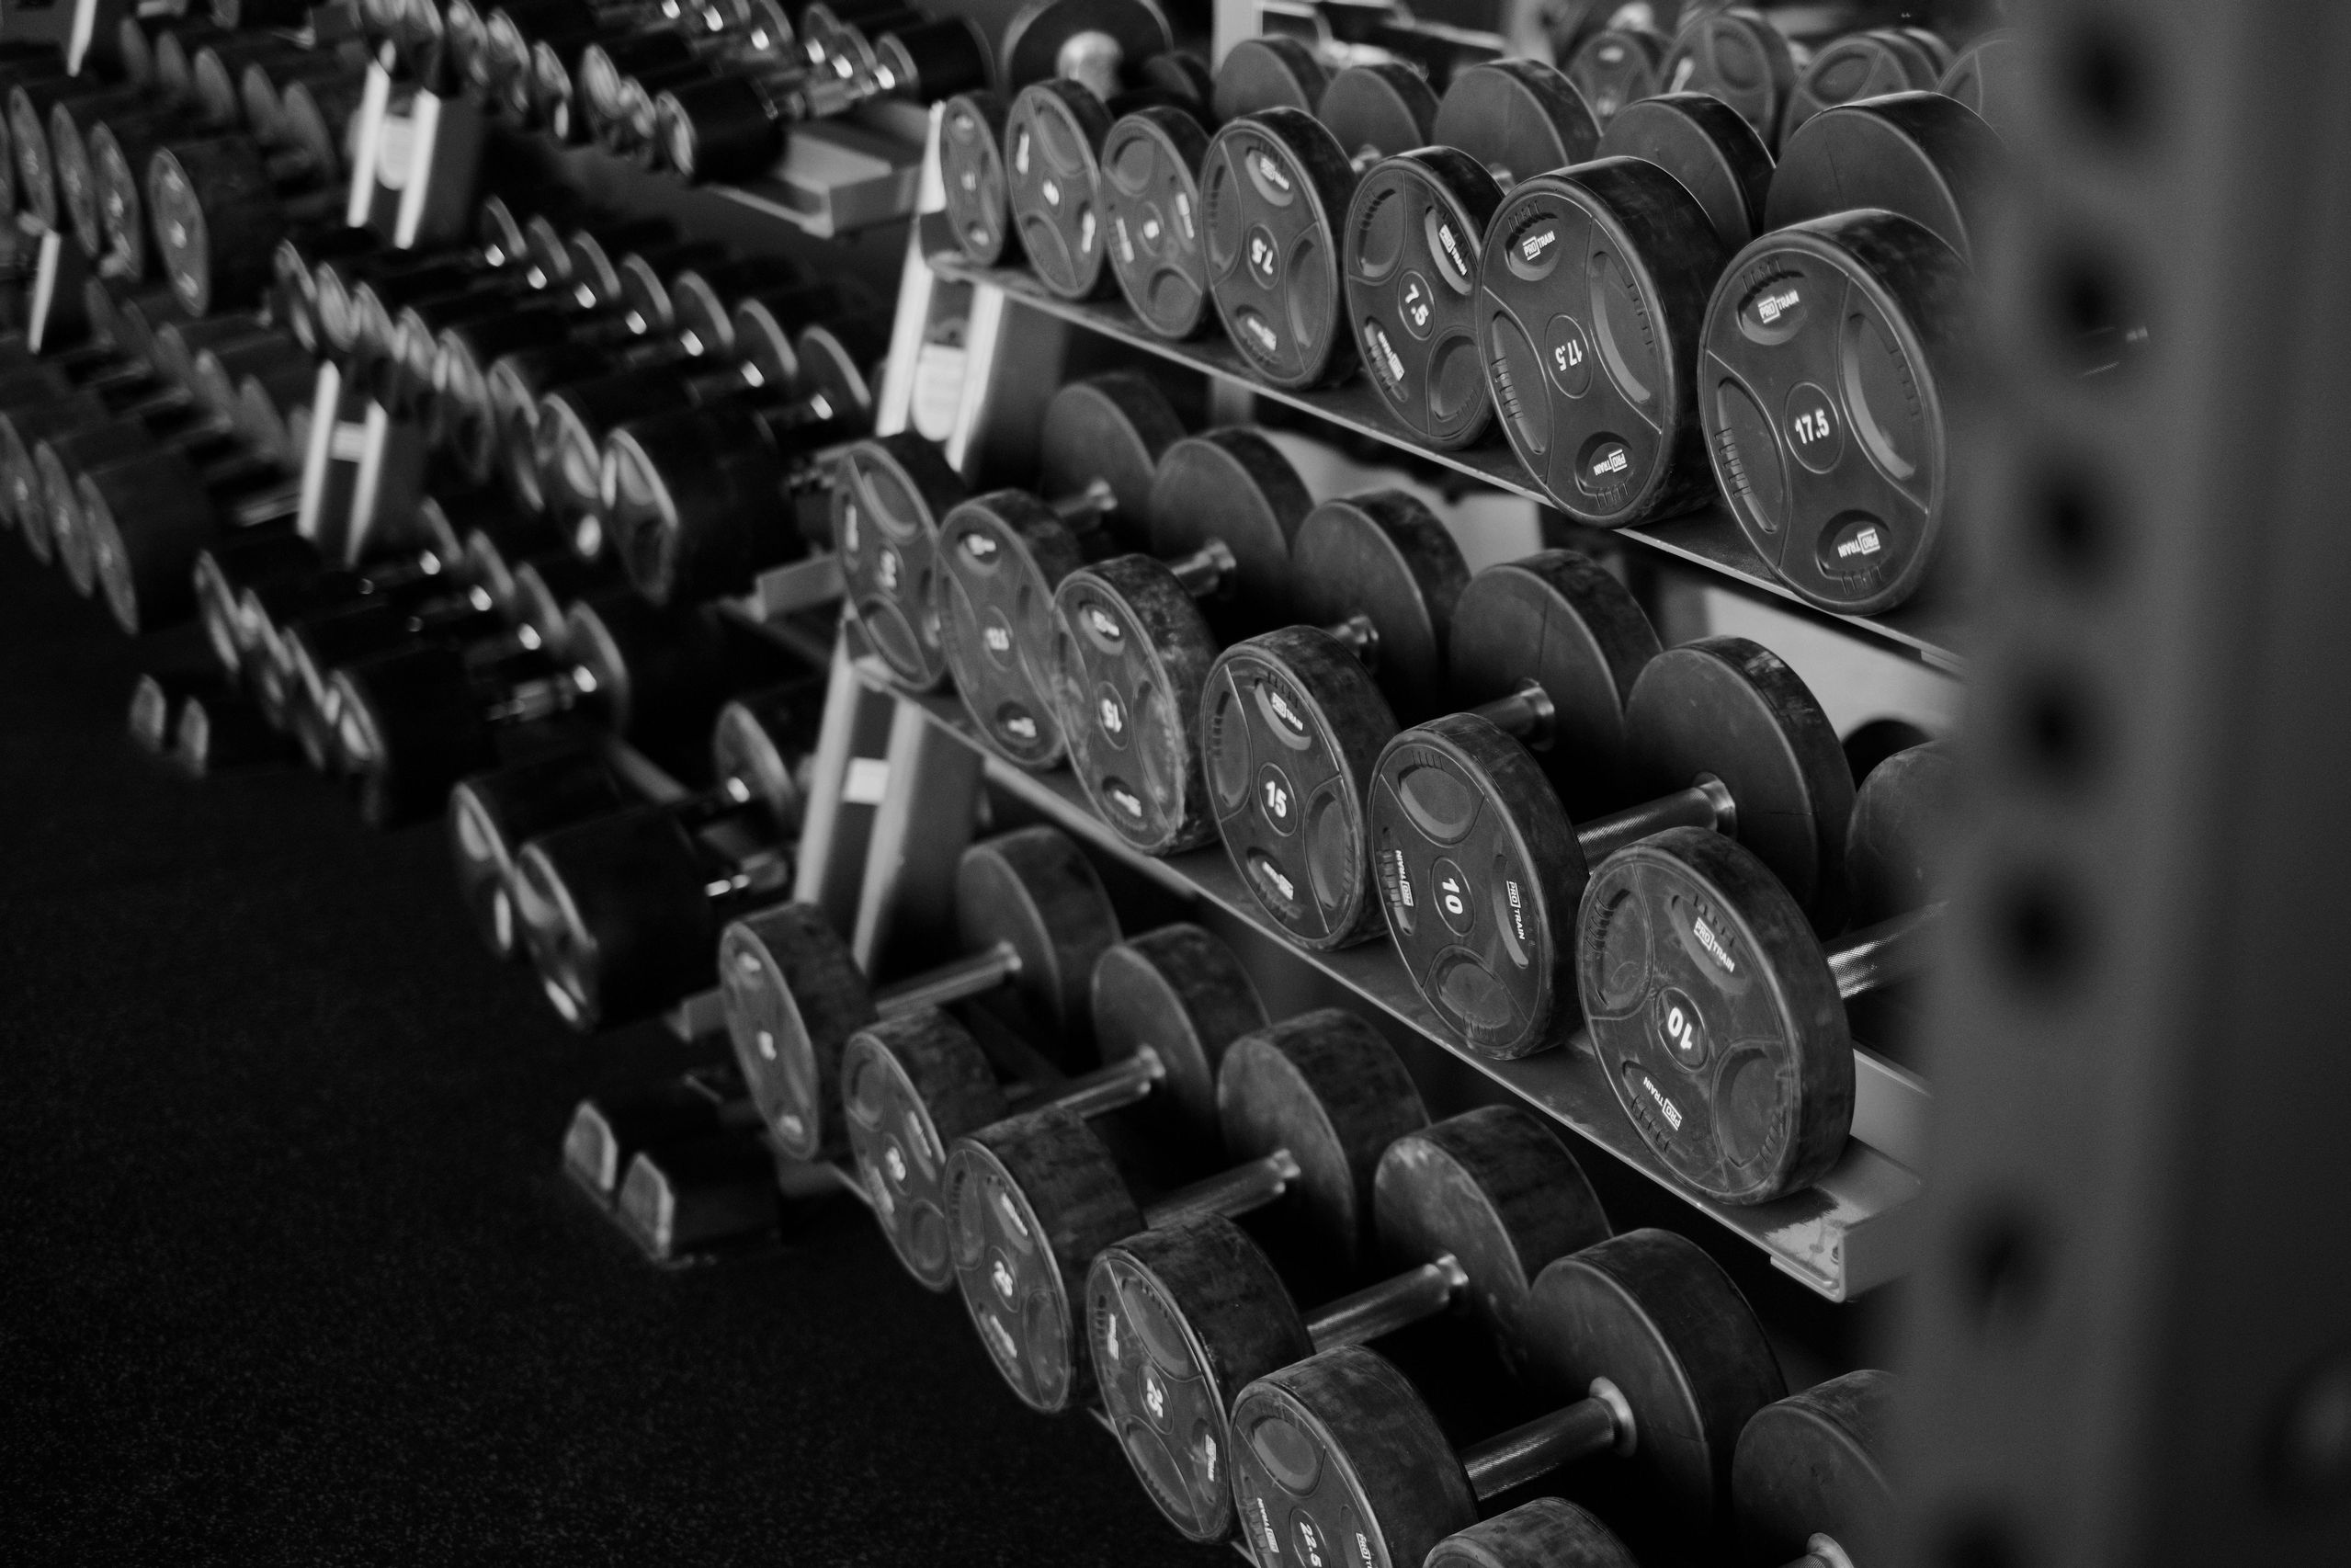 free weights training room